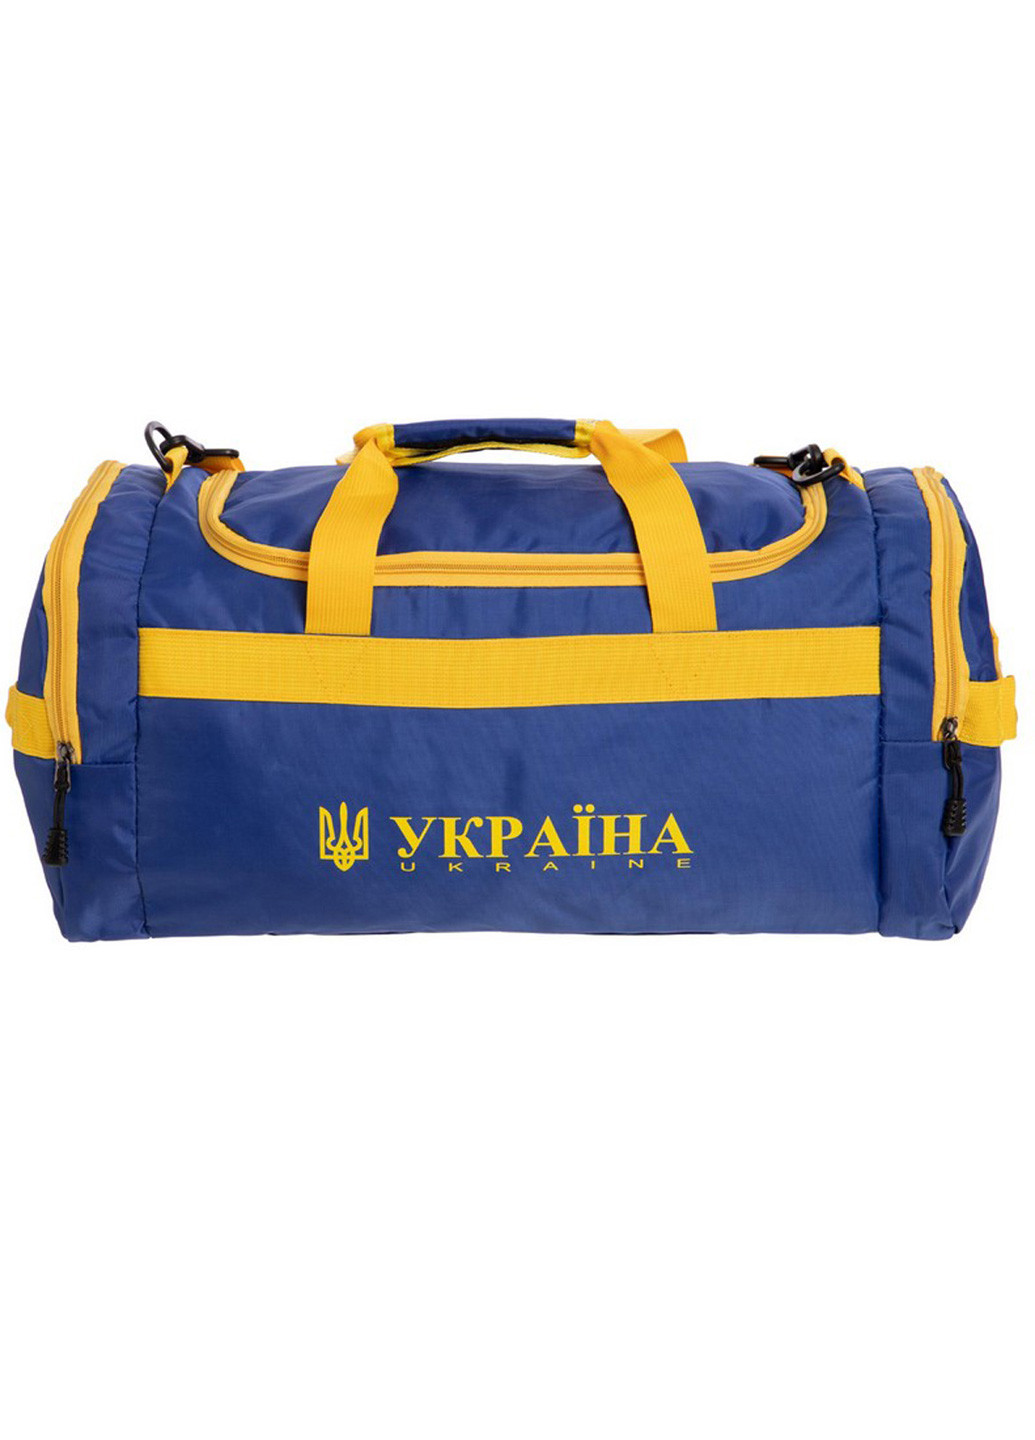 Сумка SP-Sport Украина сине-желтая Uksport (255029332)